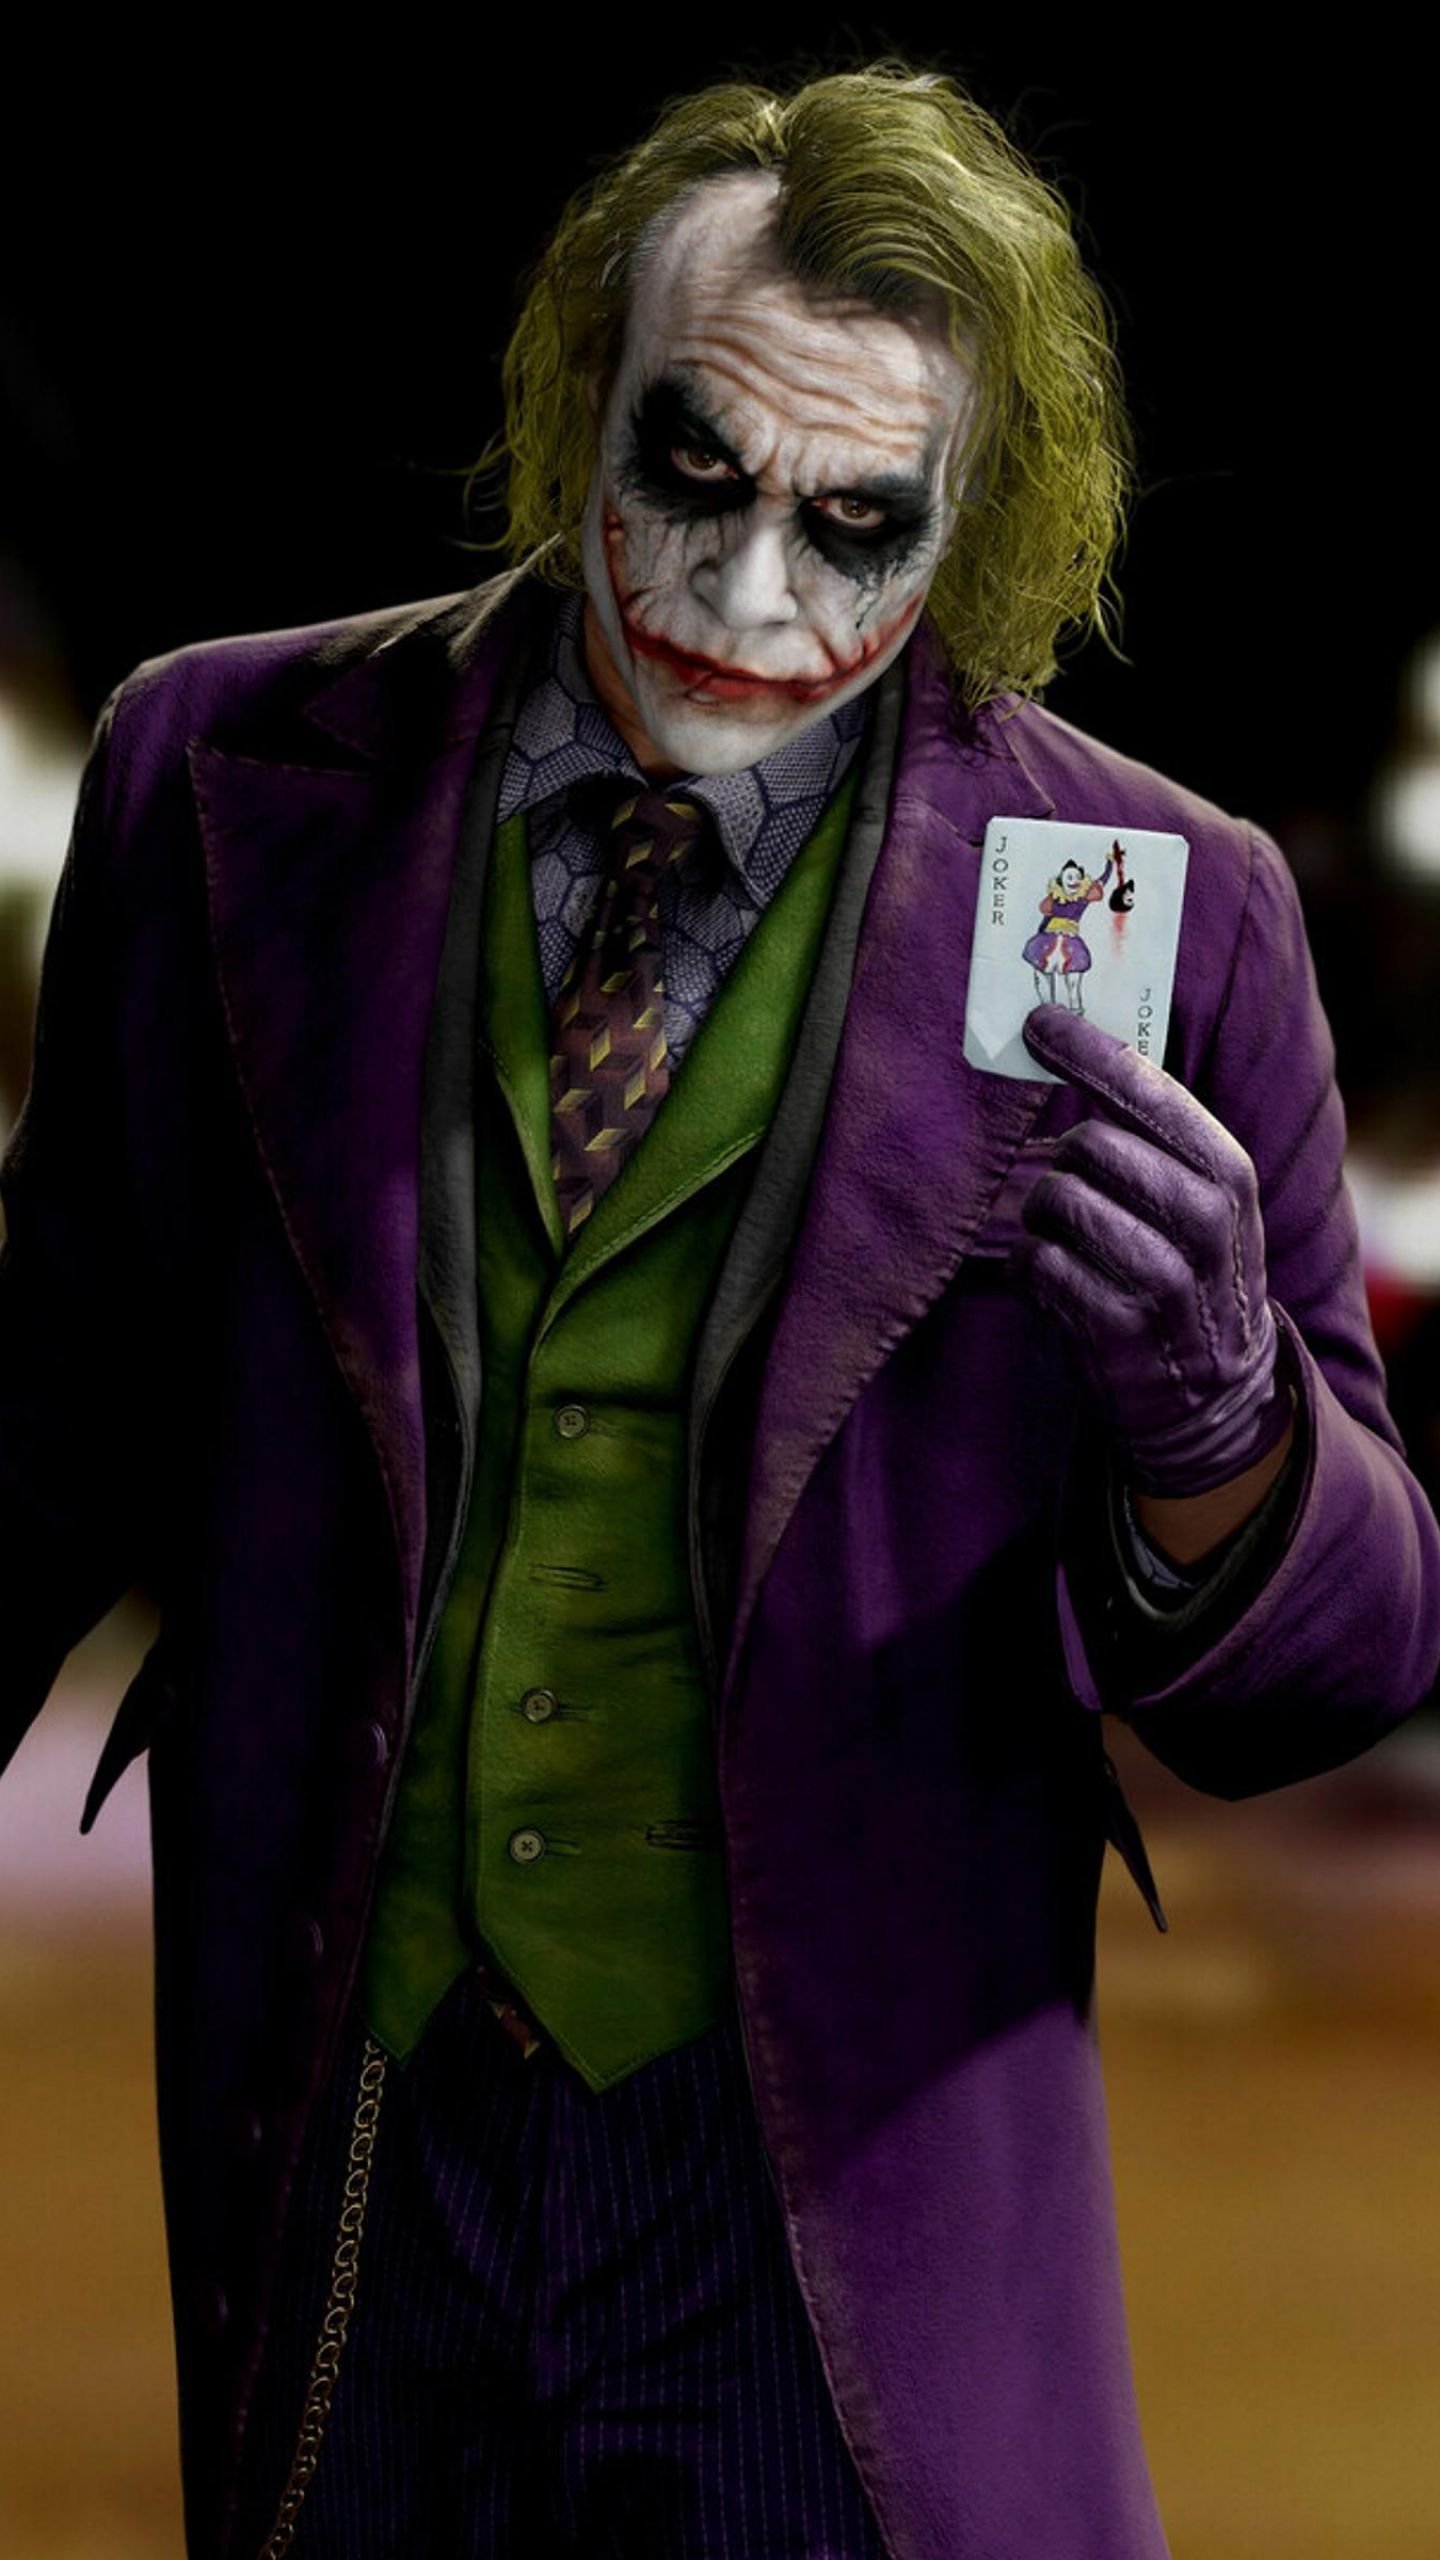 Joker with joker card